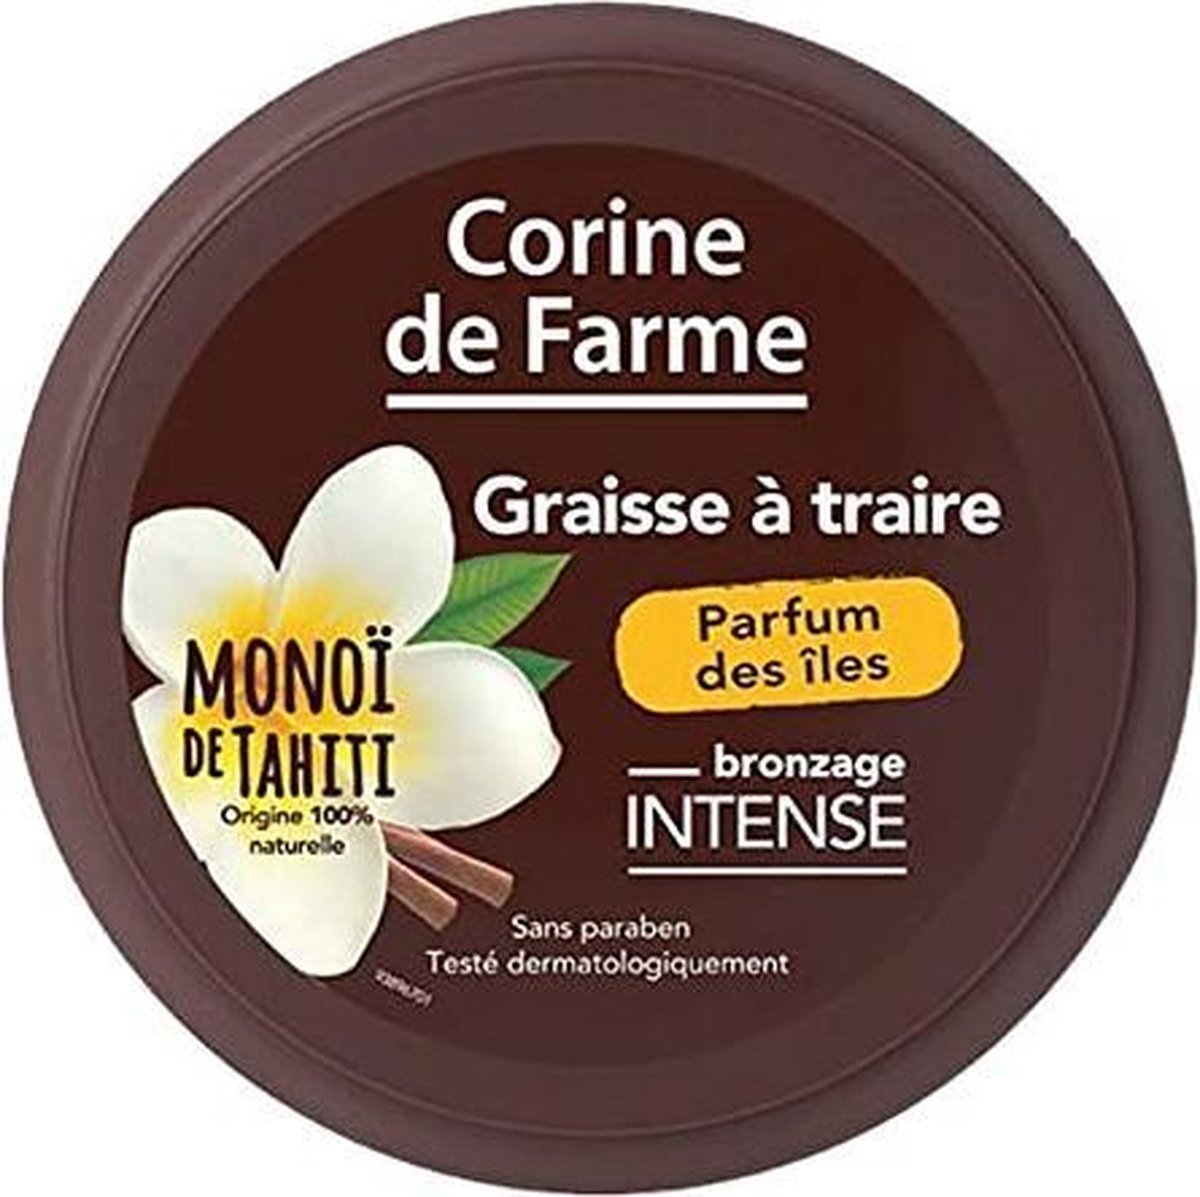 Corine de Farme Milking Grease Intense Tan Monoi from Tahiti Isle Fragrance 150 ml